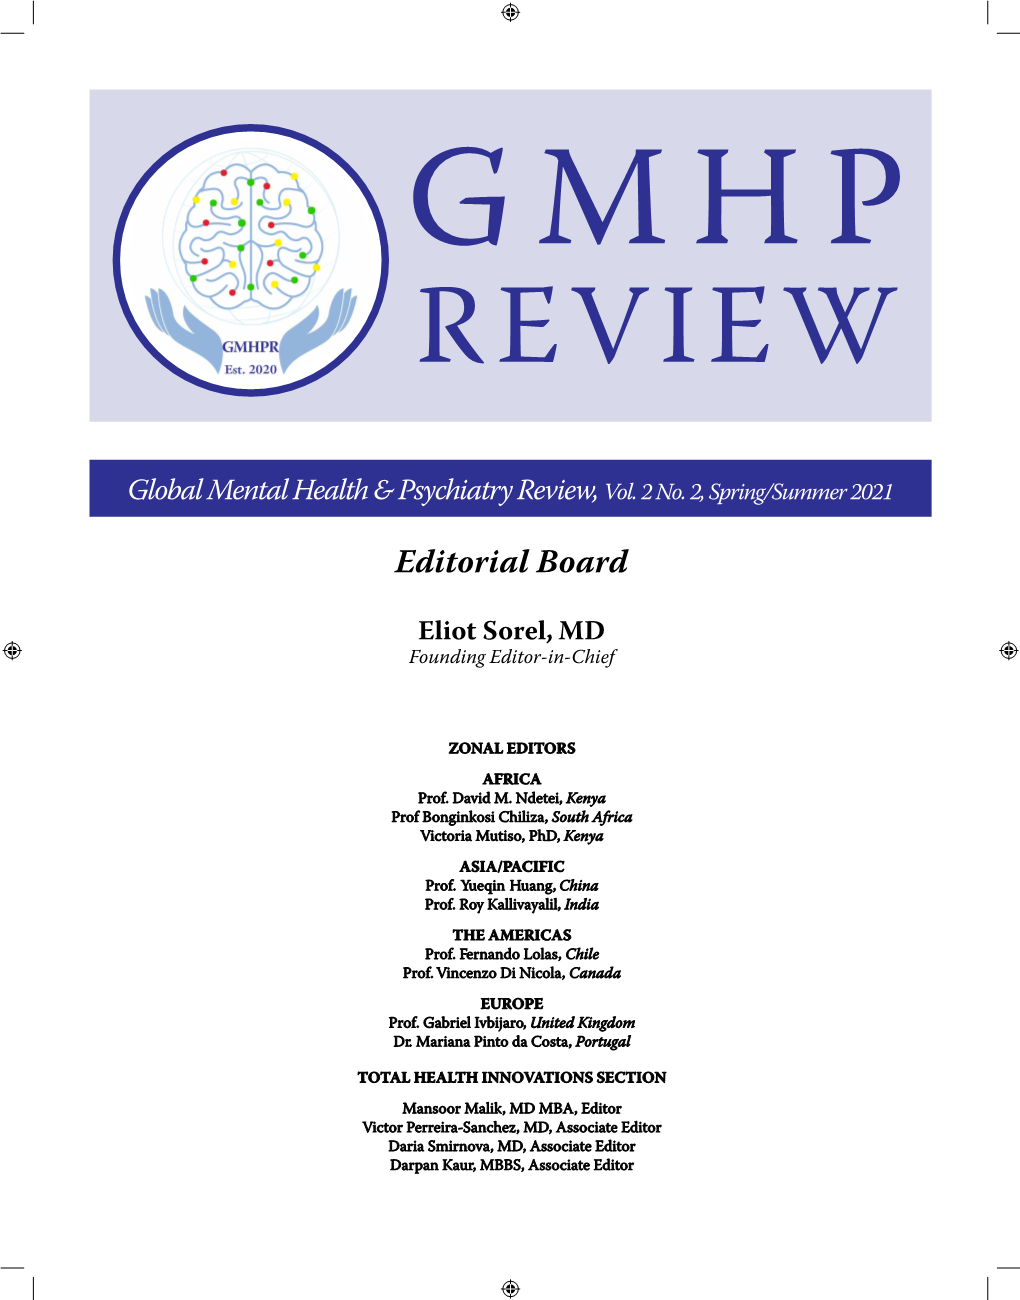 Global Mental Health & Psychiatry Review, Vol. 2 No. 2, Spring/Summer 2021